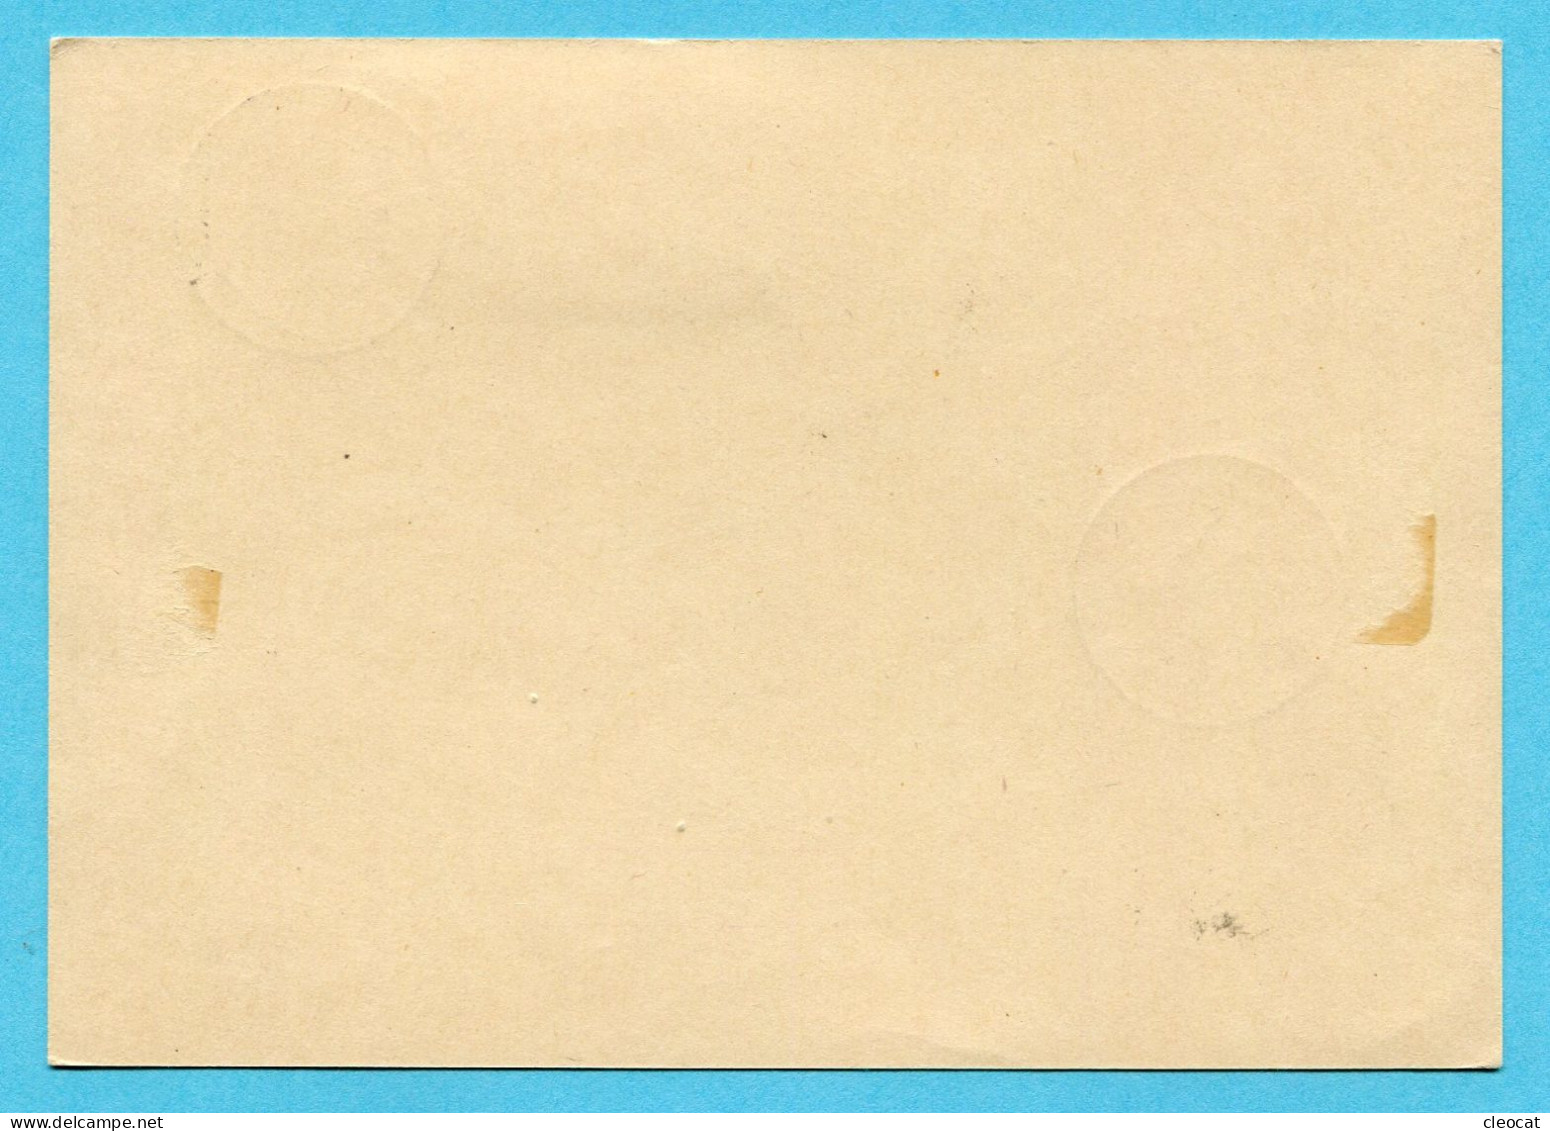 Postkarte Bern - Schweiz. Postmuseum 1937 - Bild Bern - Postmuseum - Entiers Postaux